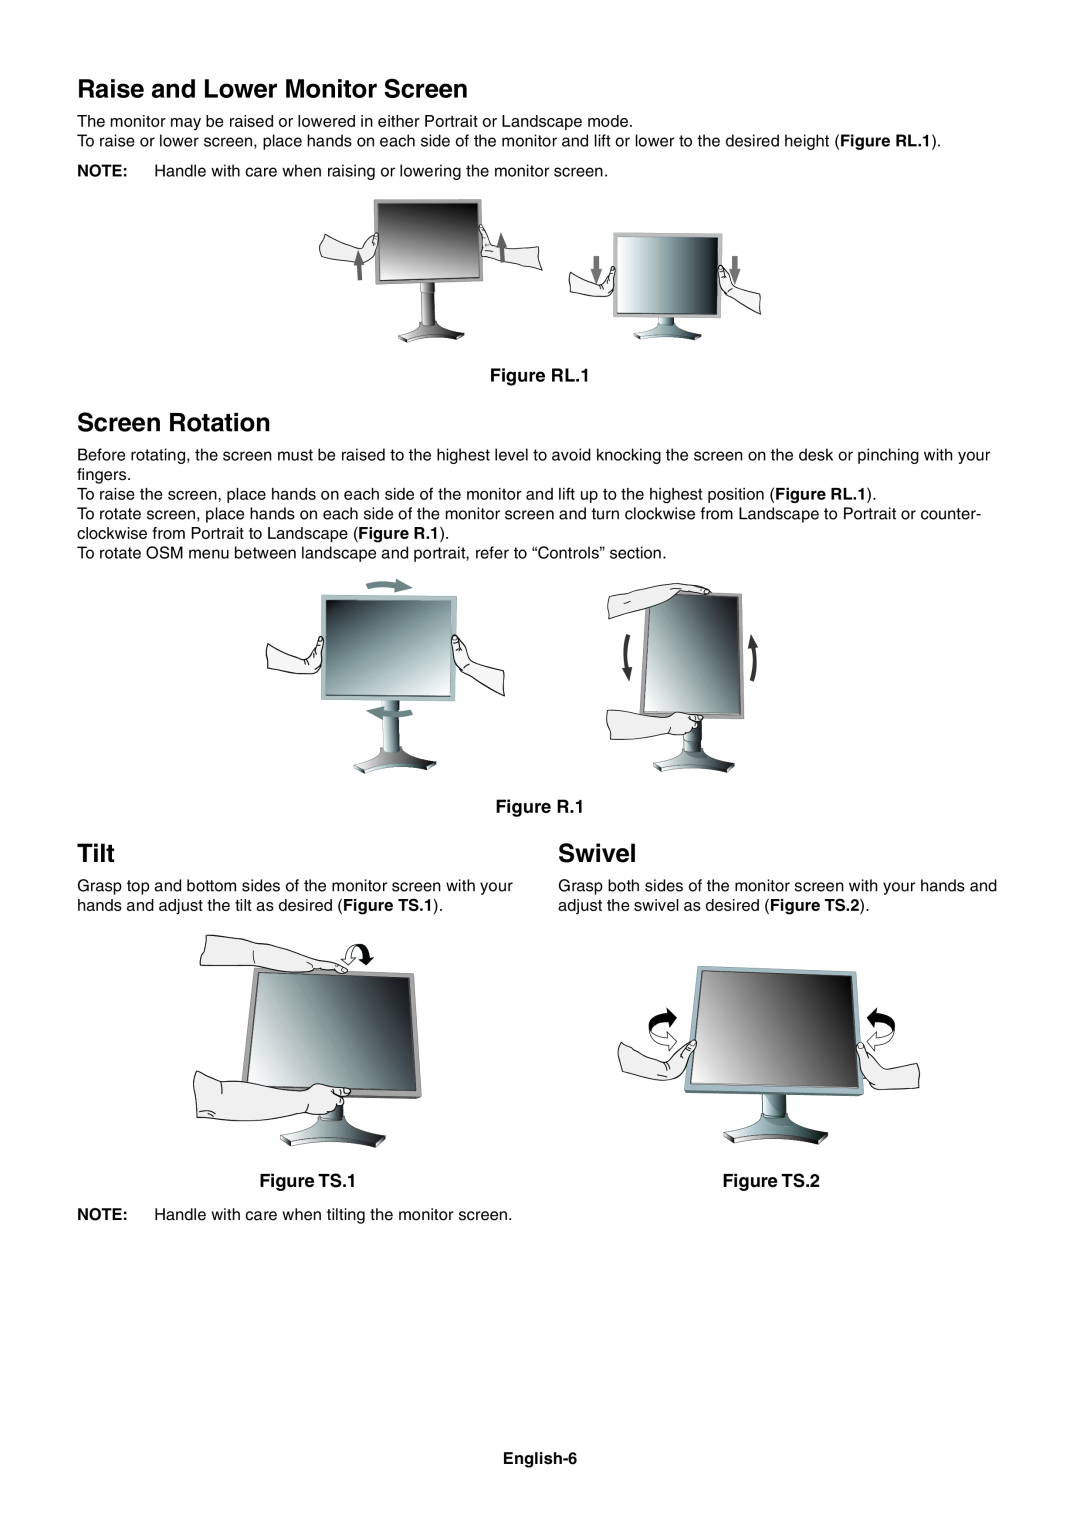 NEC 2690 user manual Raise and Lower Monitor Screen, Screen Rotation, Tilt, Swivel, Figure RL.1, Figure R.1, Figure TS.1 